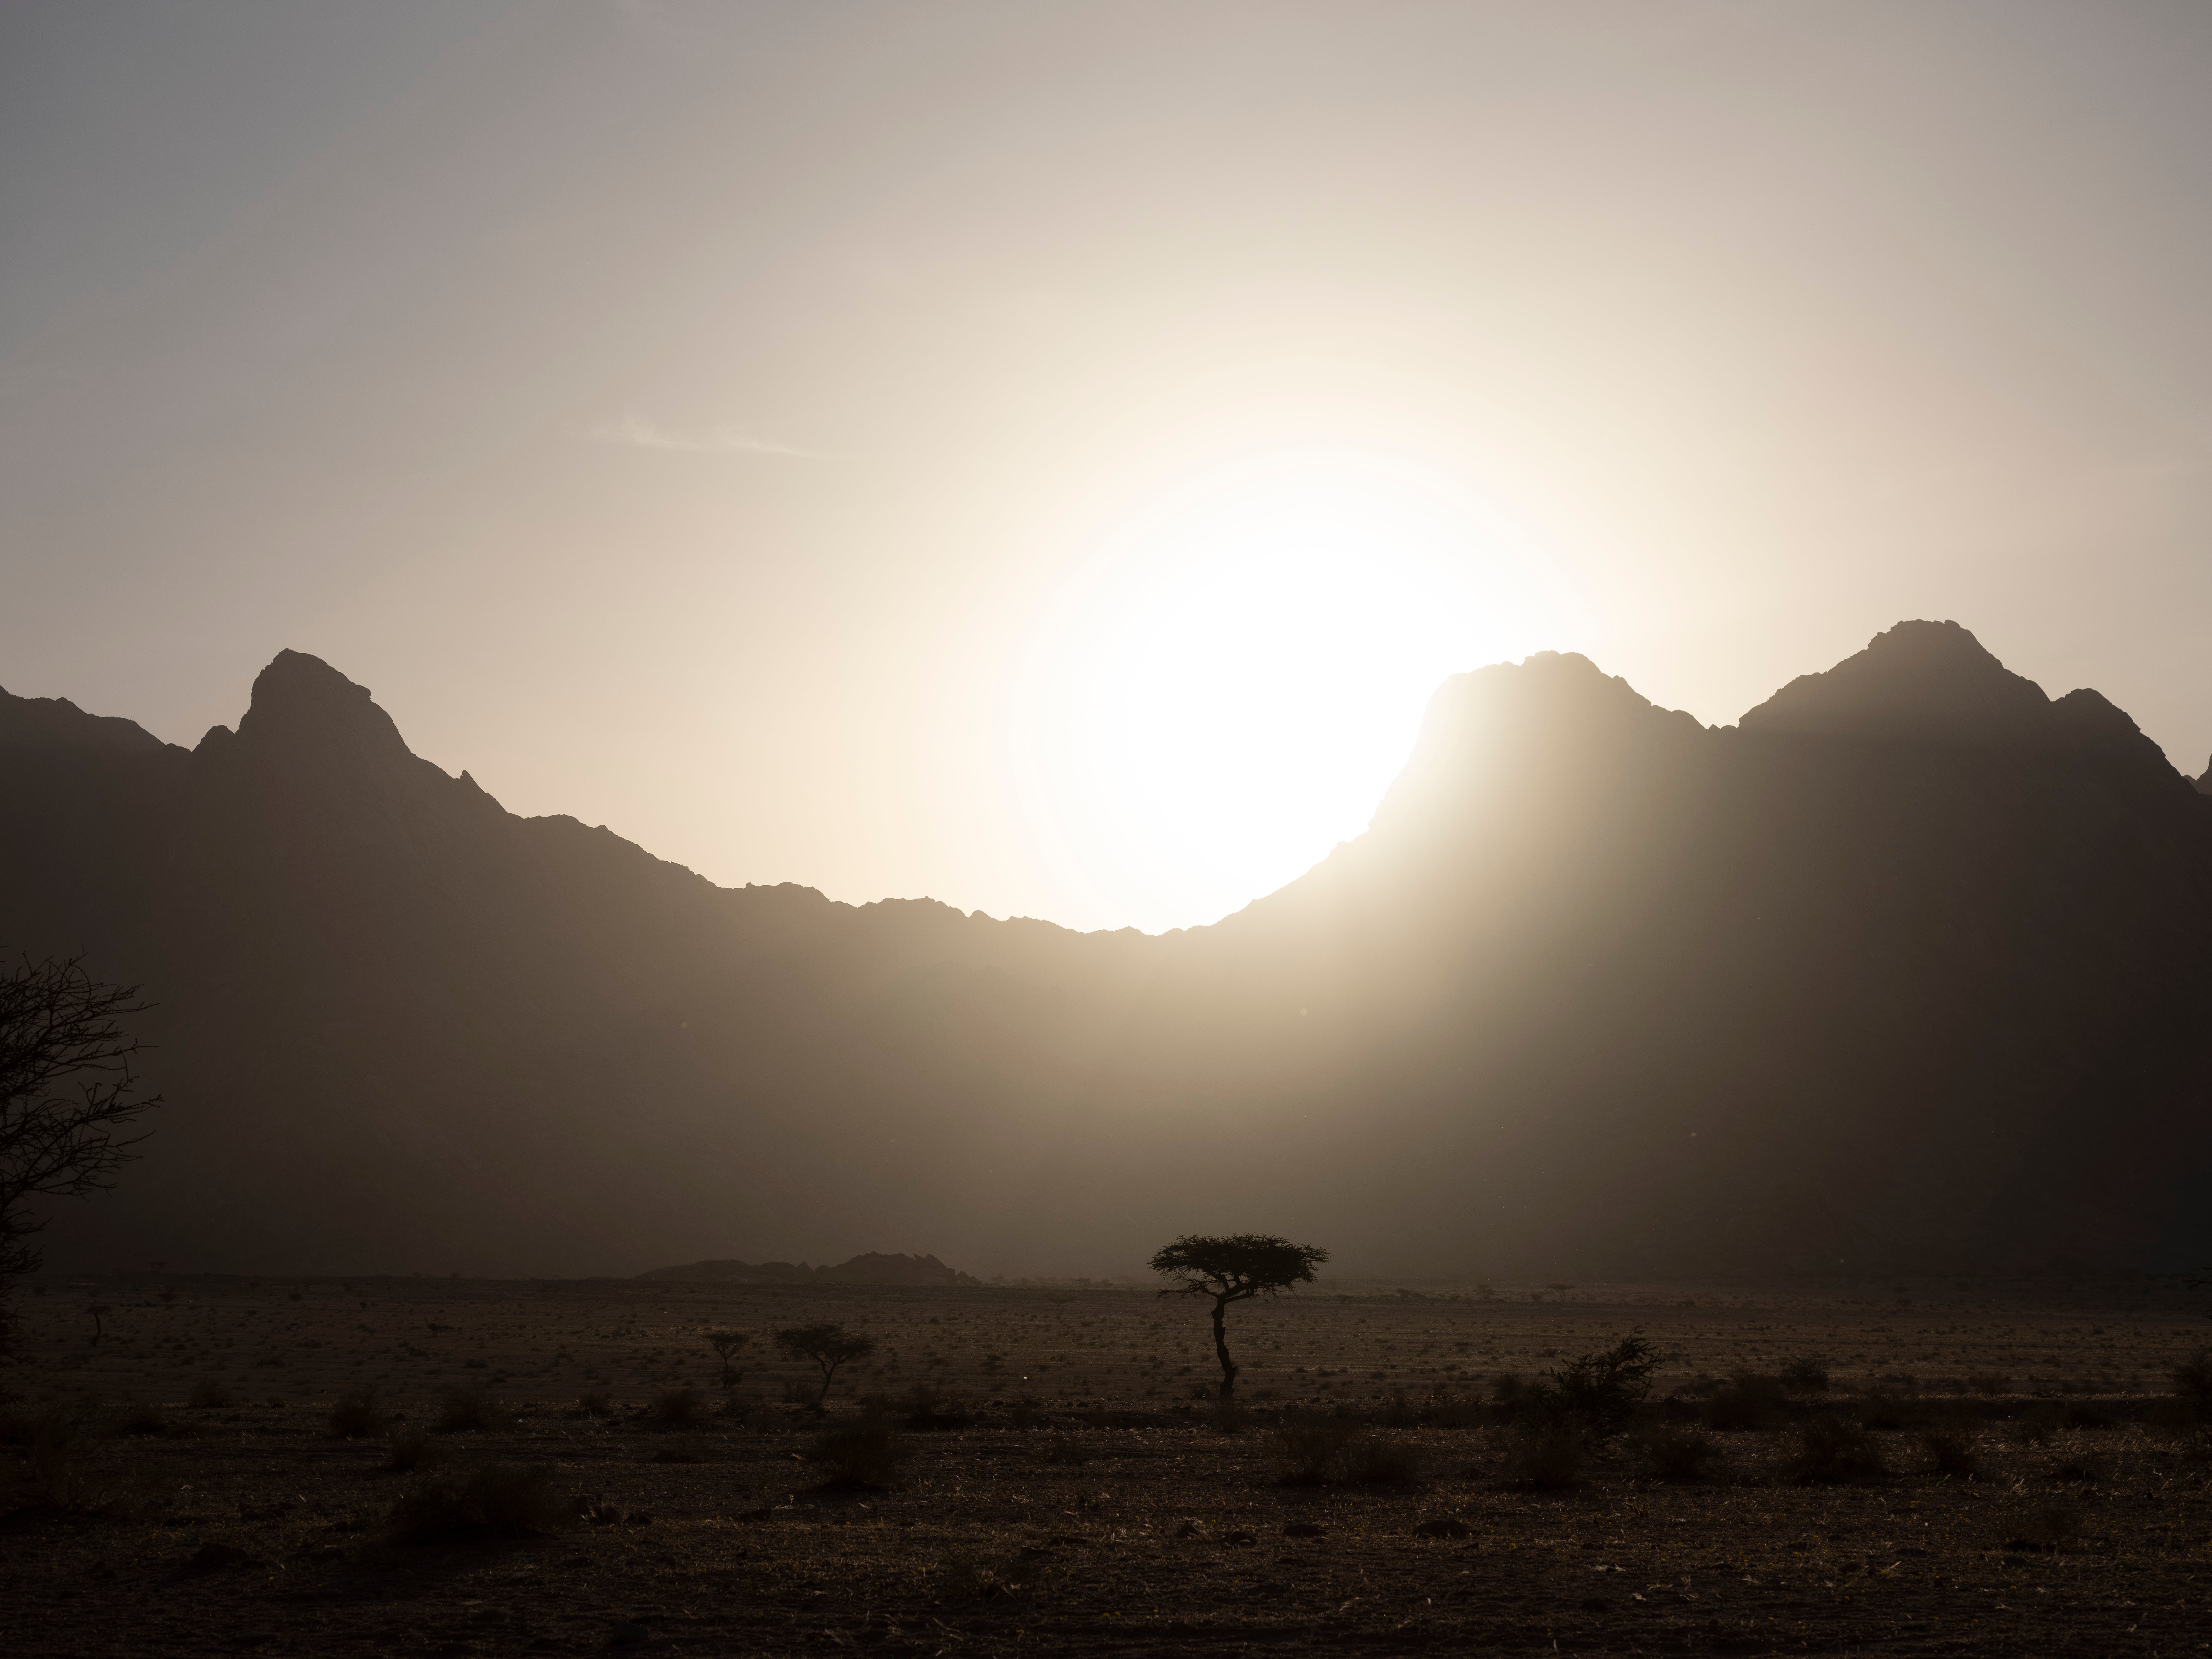 Mountains in Tabuk, northwest Saudi Arabia